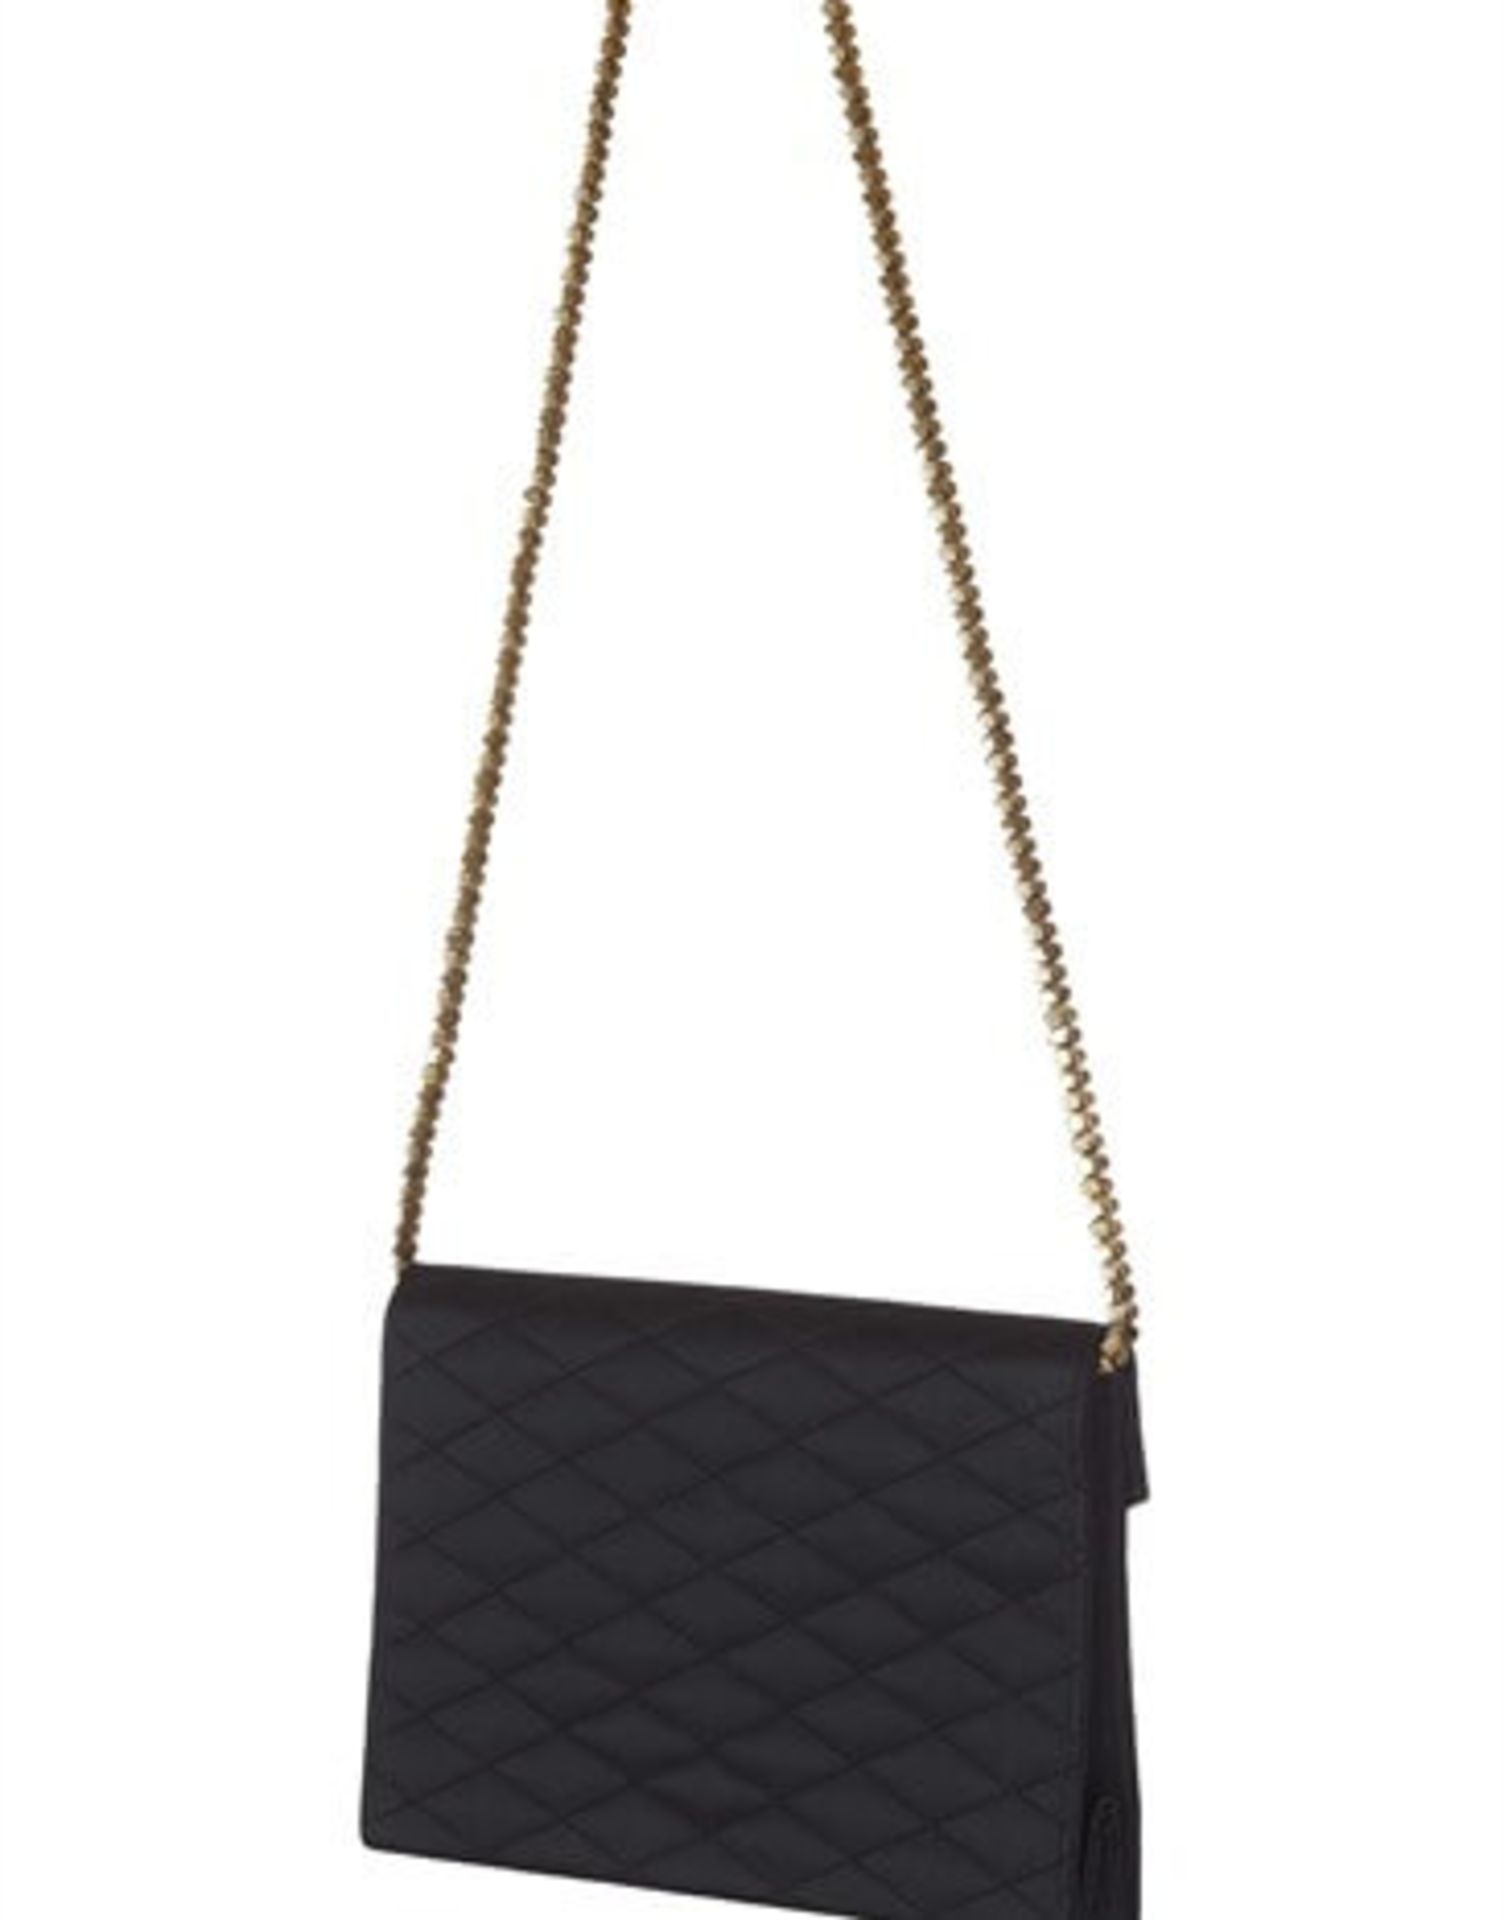 1980s Chanel Black Satin Bag - Image 3 of 5